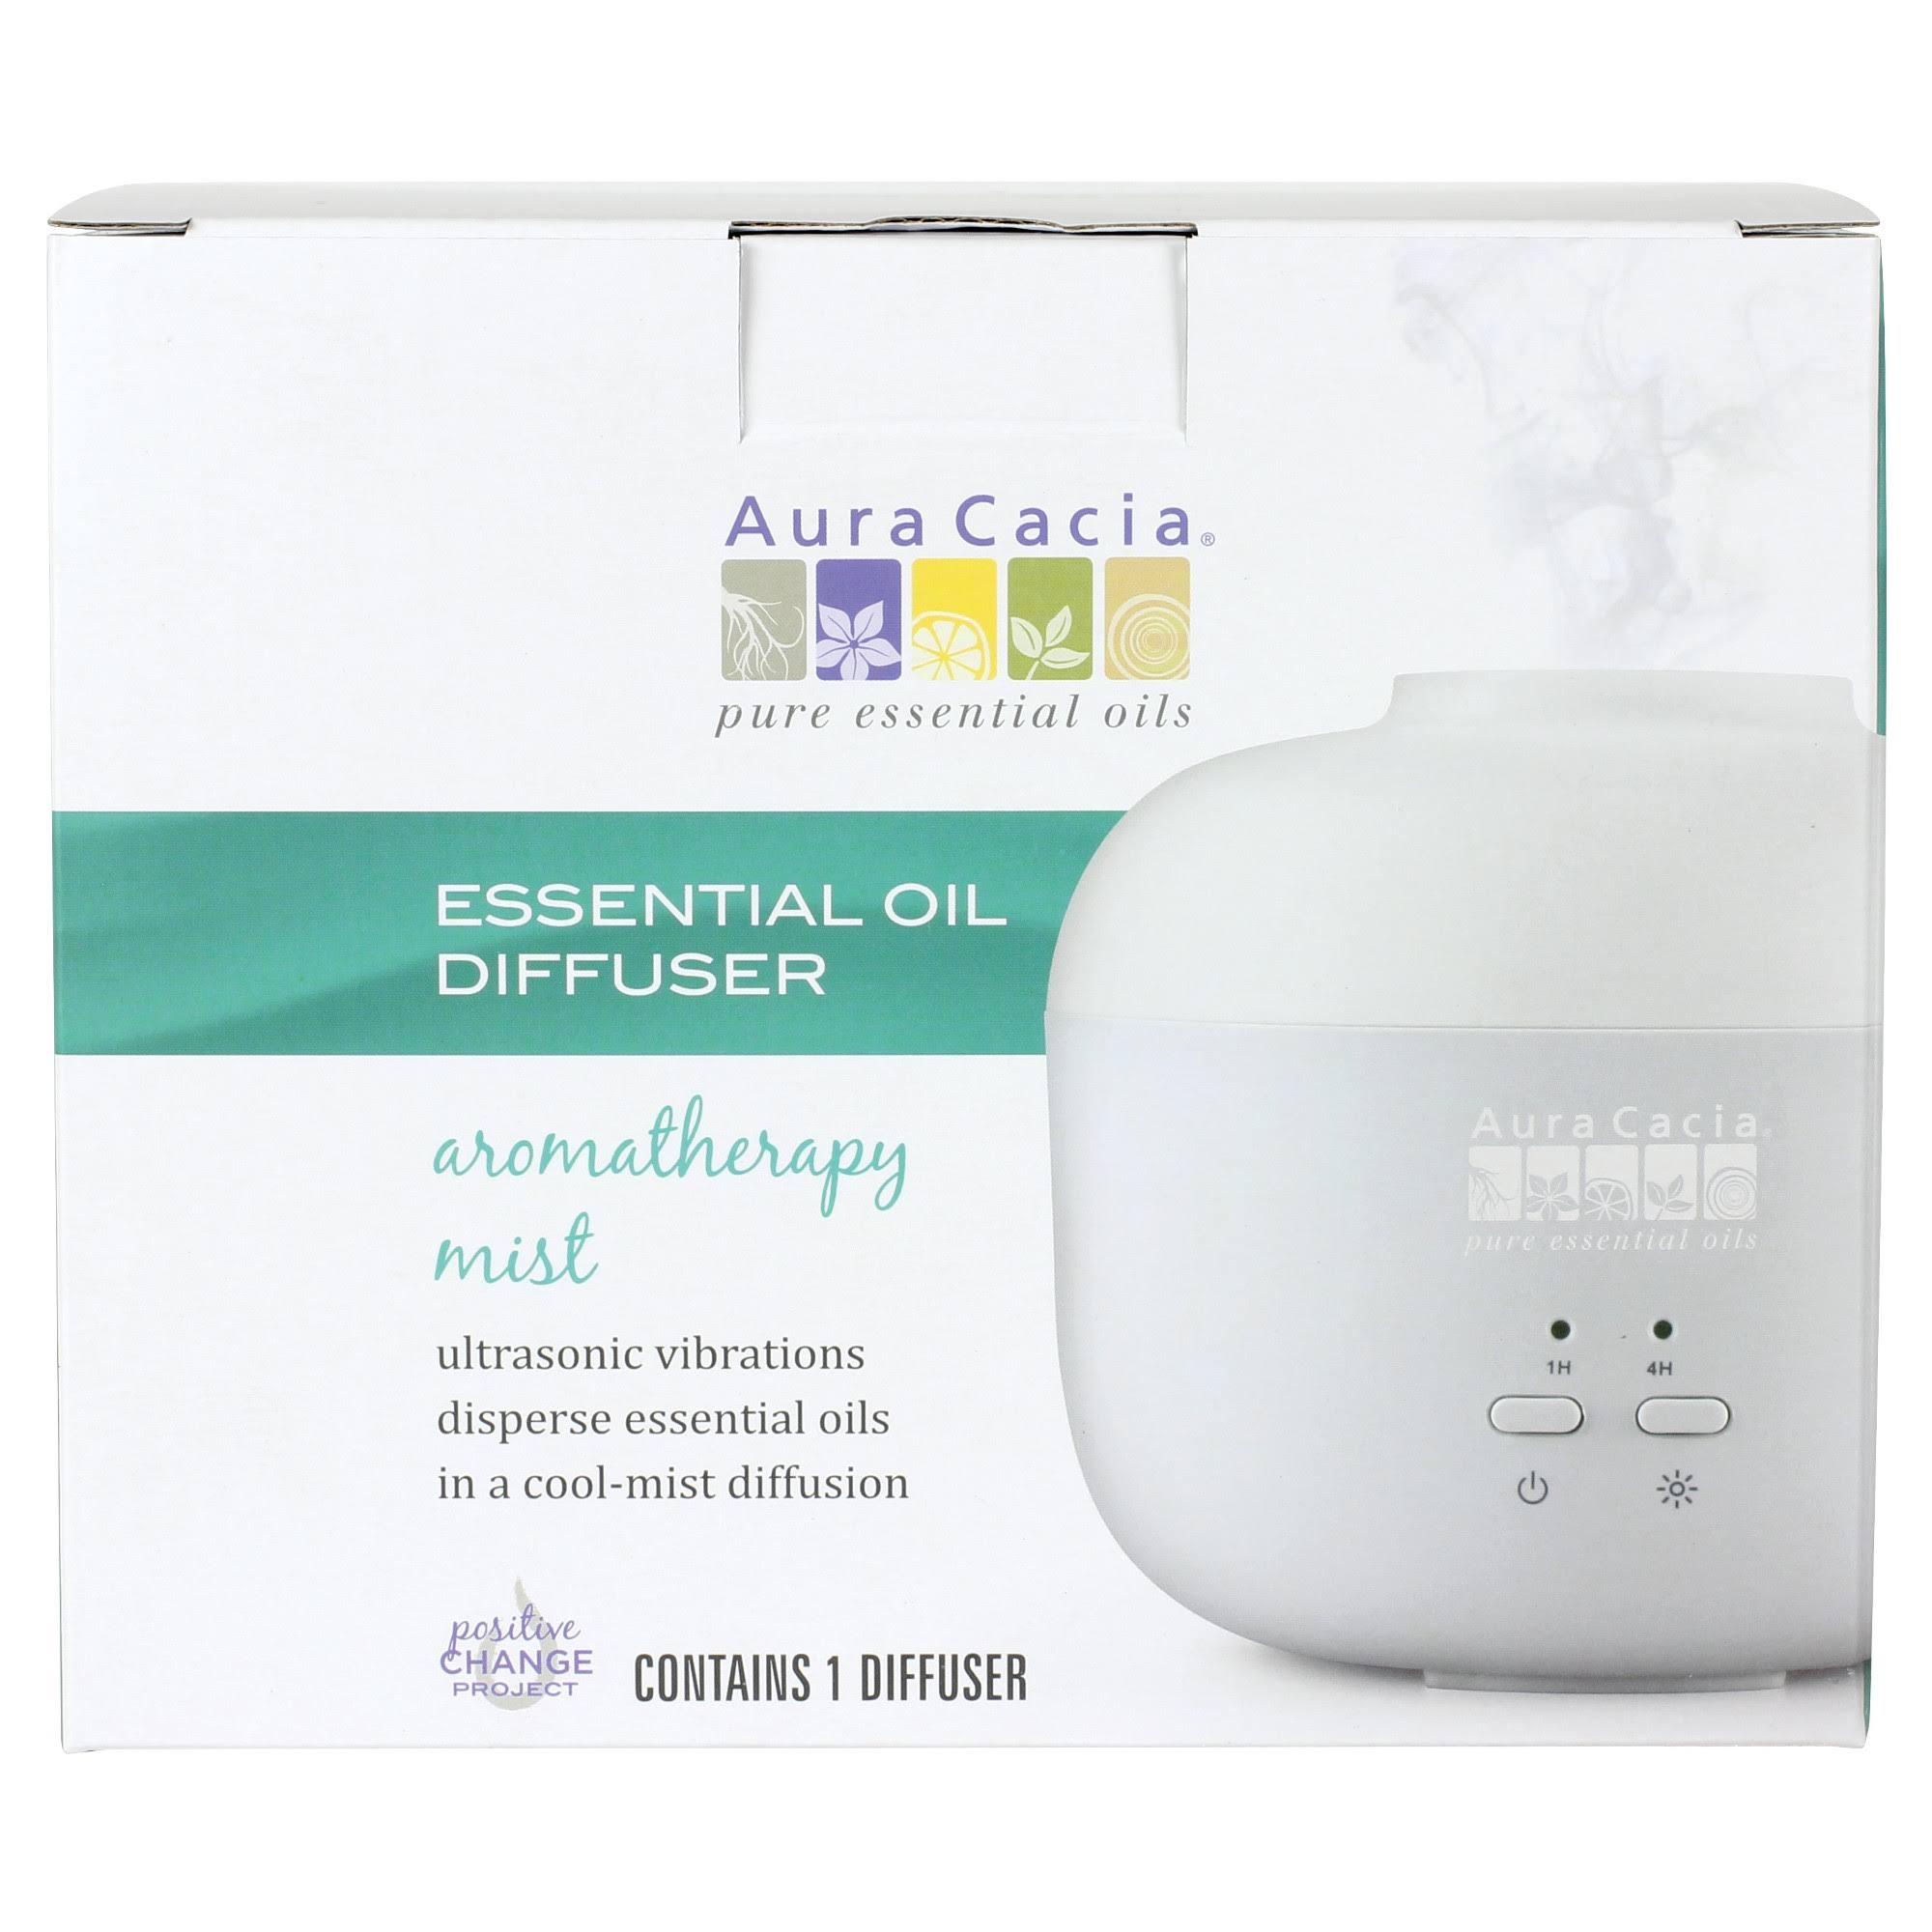 Aura Cacia Essential Oil Diffuser - Aromatherapy Mist